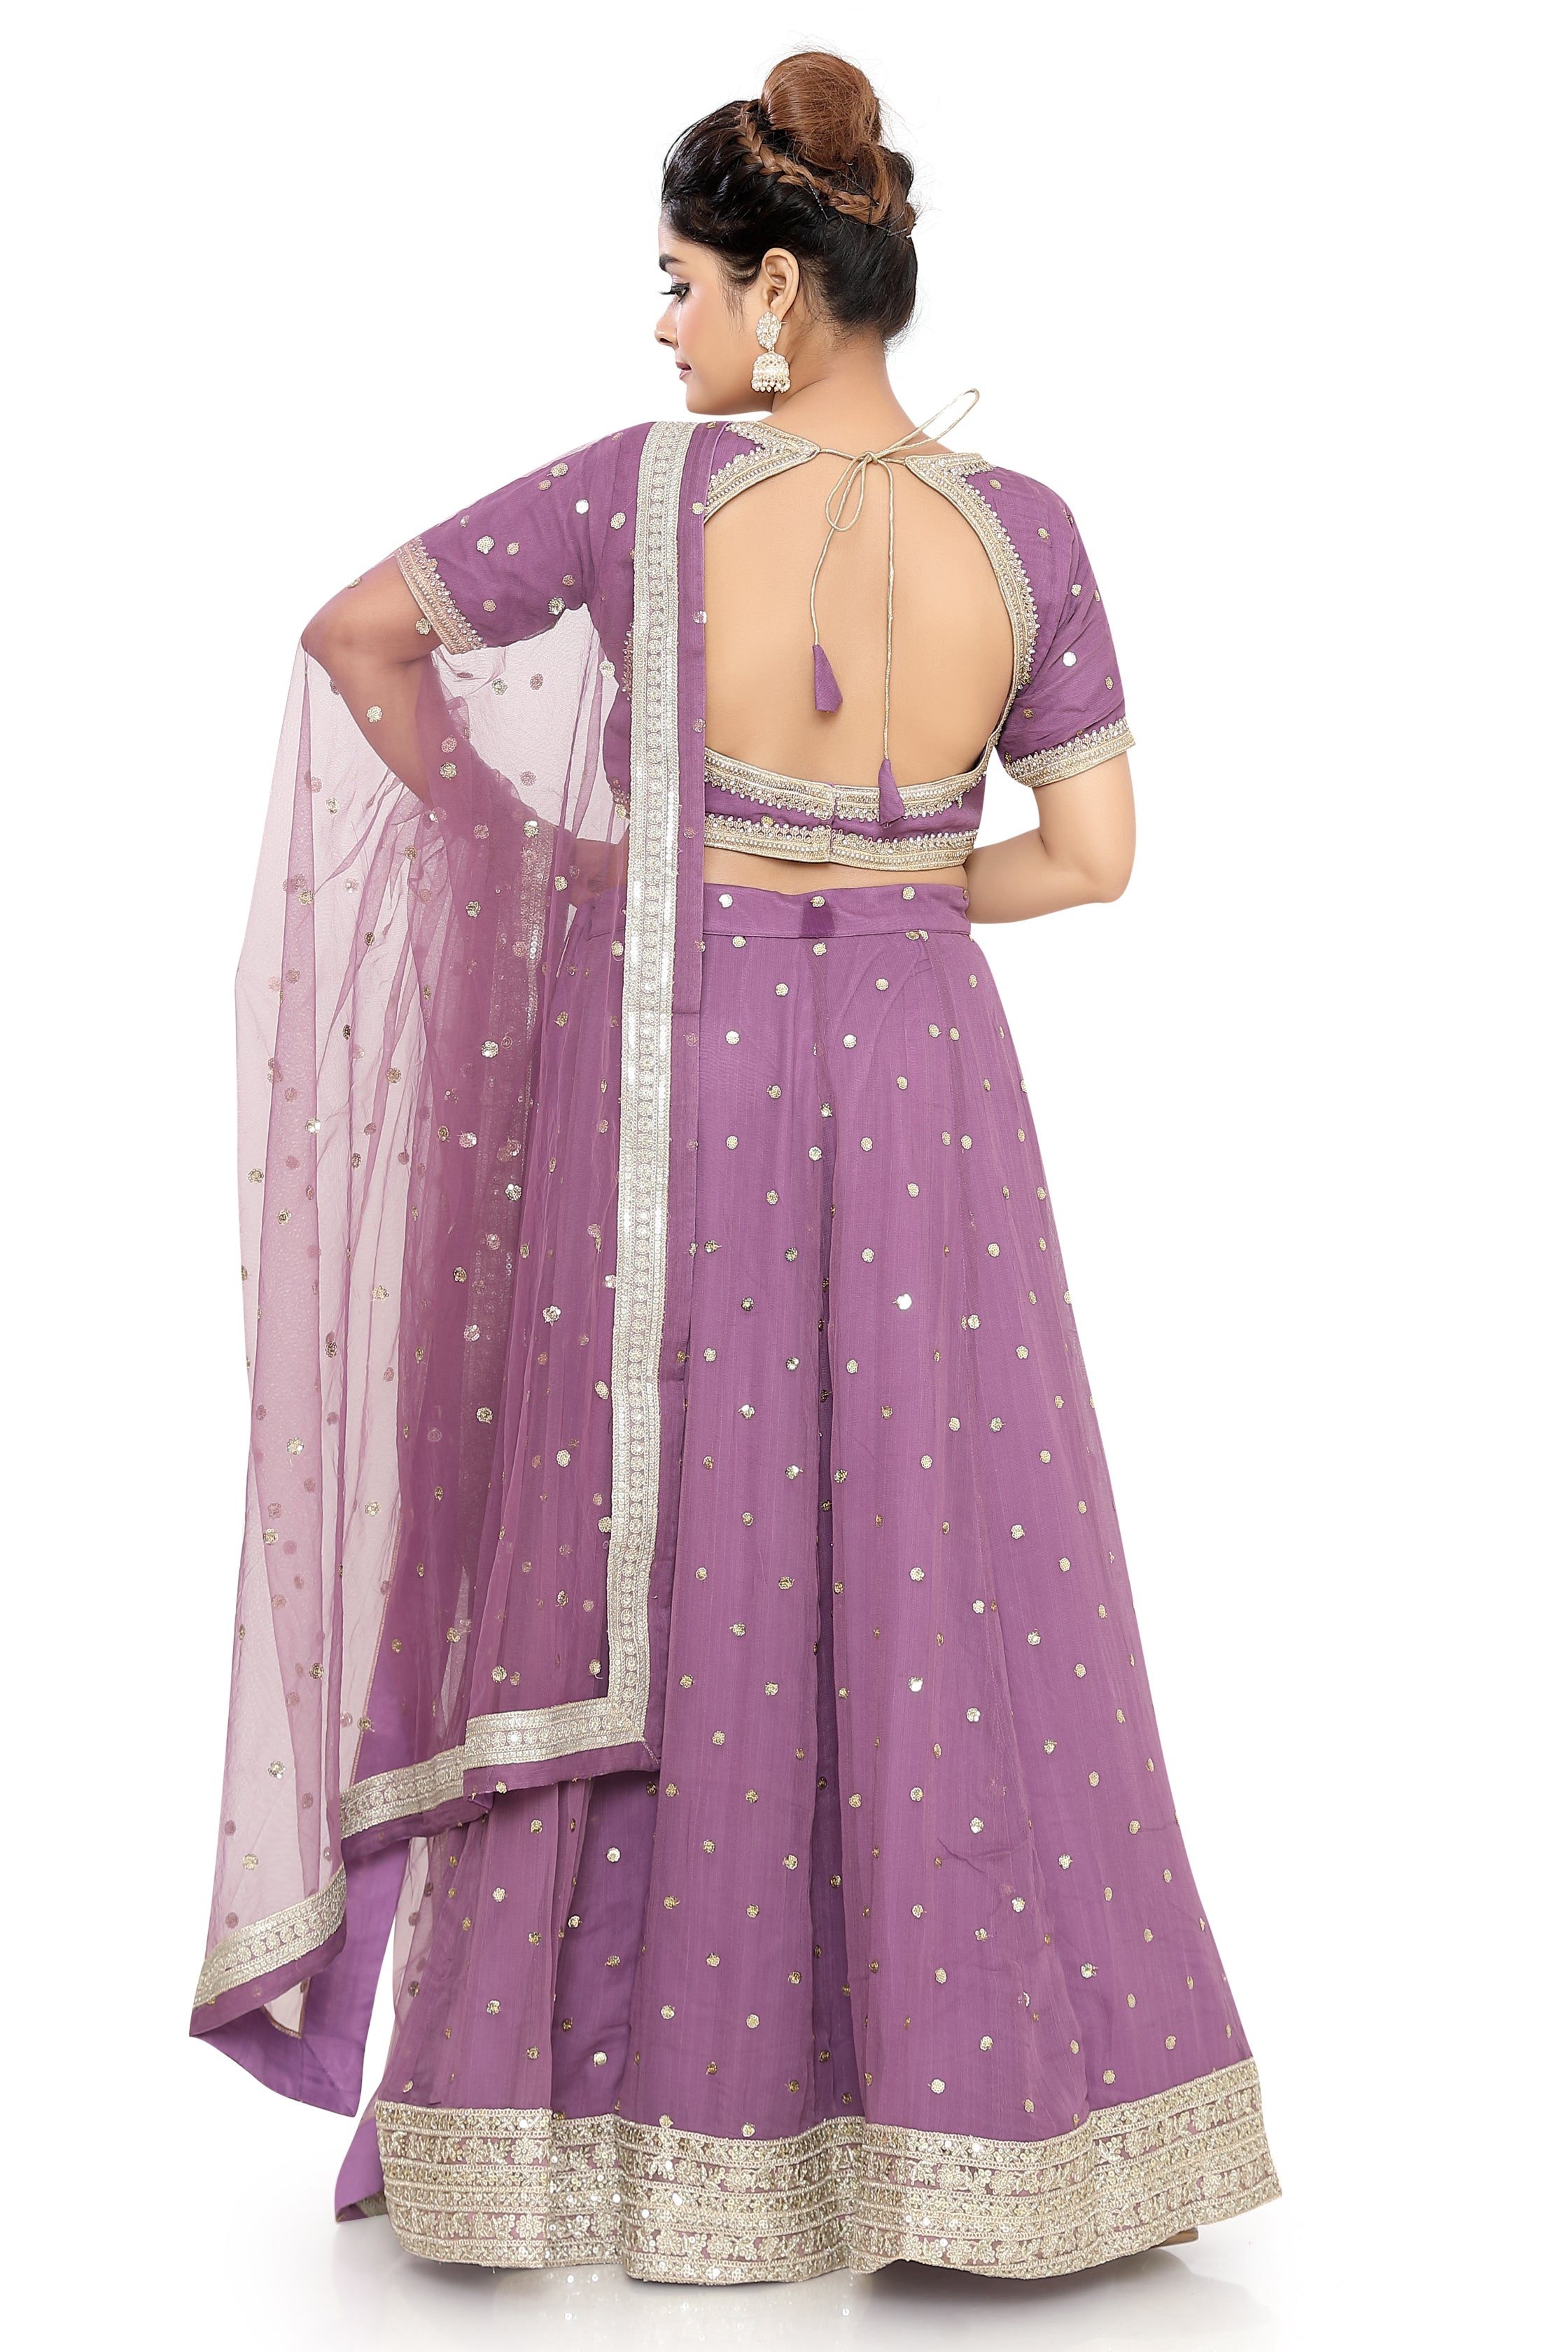 Purple Chiffon Lehenga Choli - Premium Partywear Lehenga from Dulhan Exclusives - Just $250! Shop now at Dulhan Exclusives